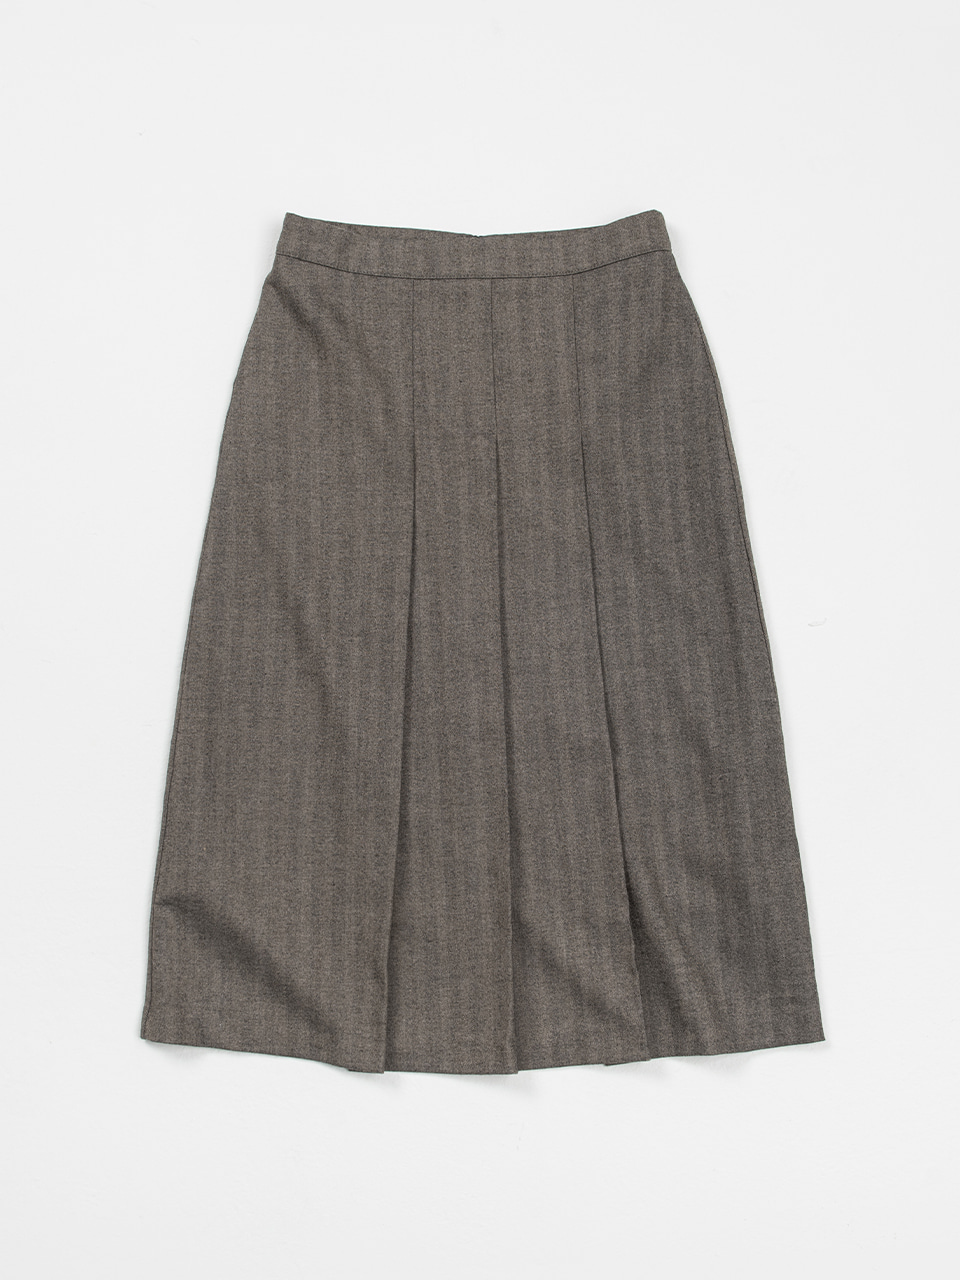 autumn pleats skirt - brownBRENDA BRENDEN